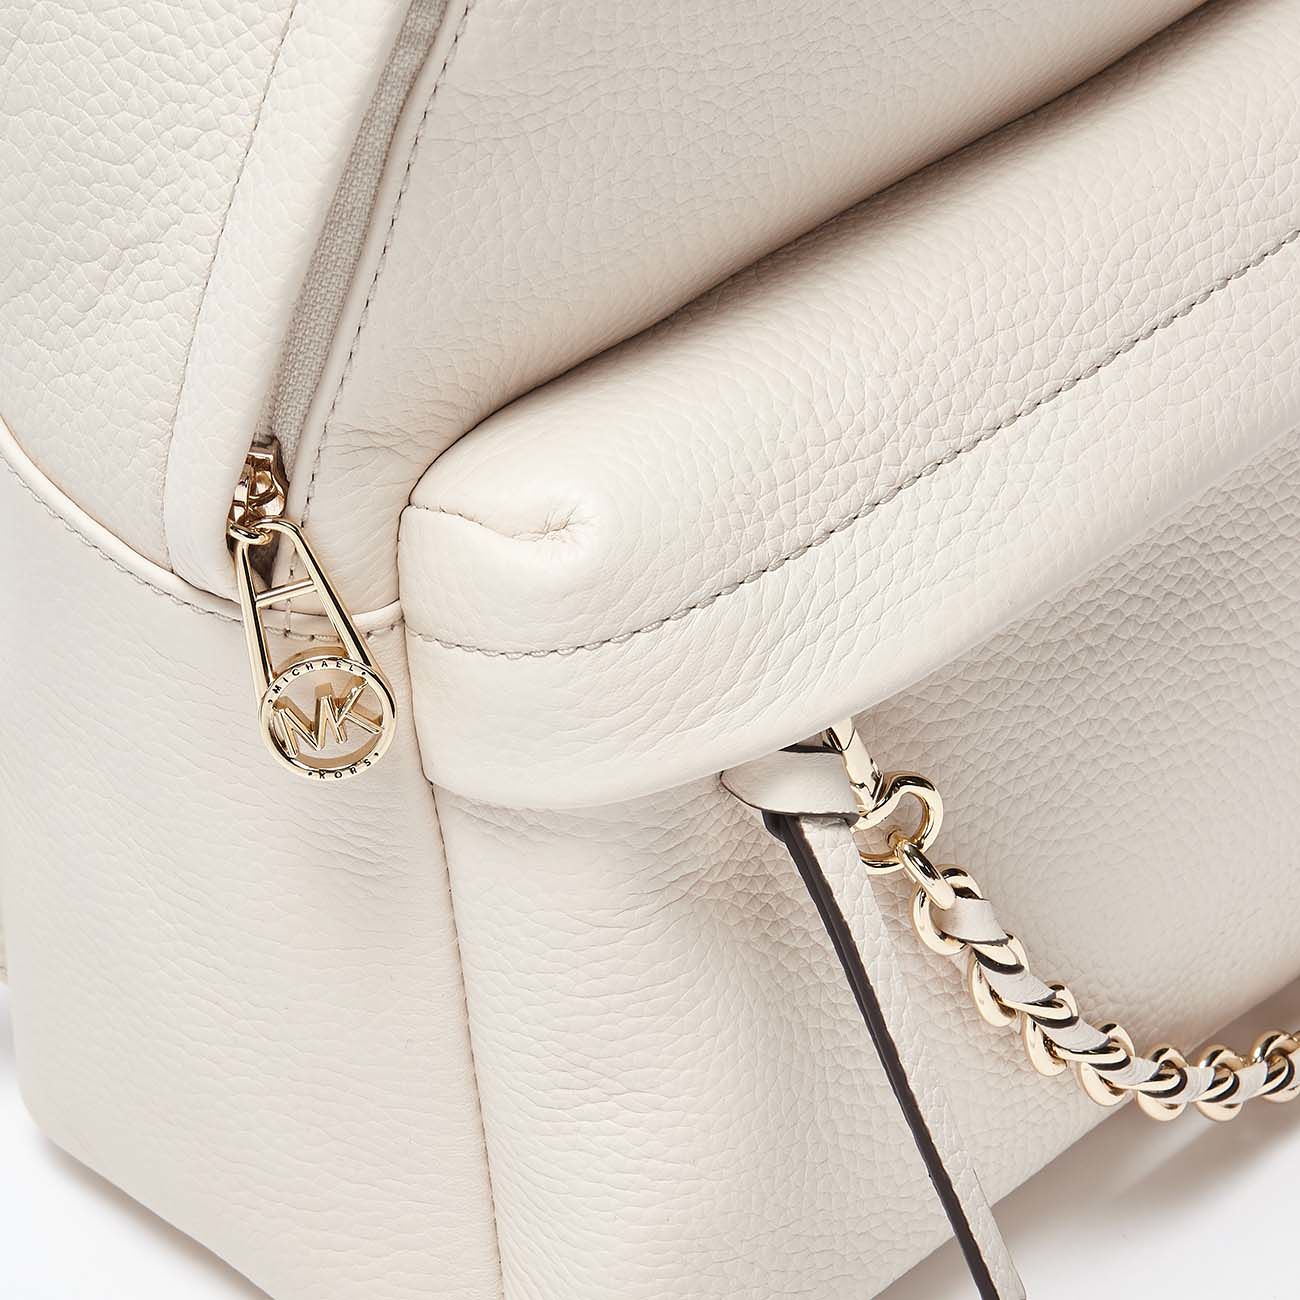 MICHAEL KORS Beige and white MK shoulder bag handbag Gold Chain Straps